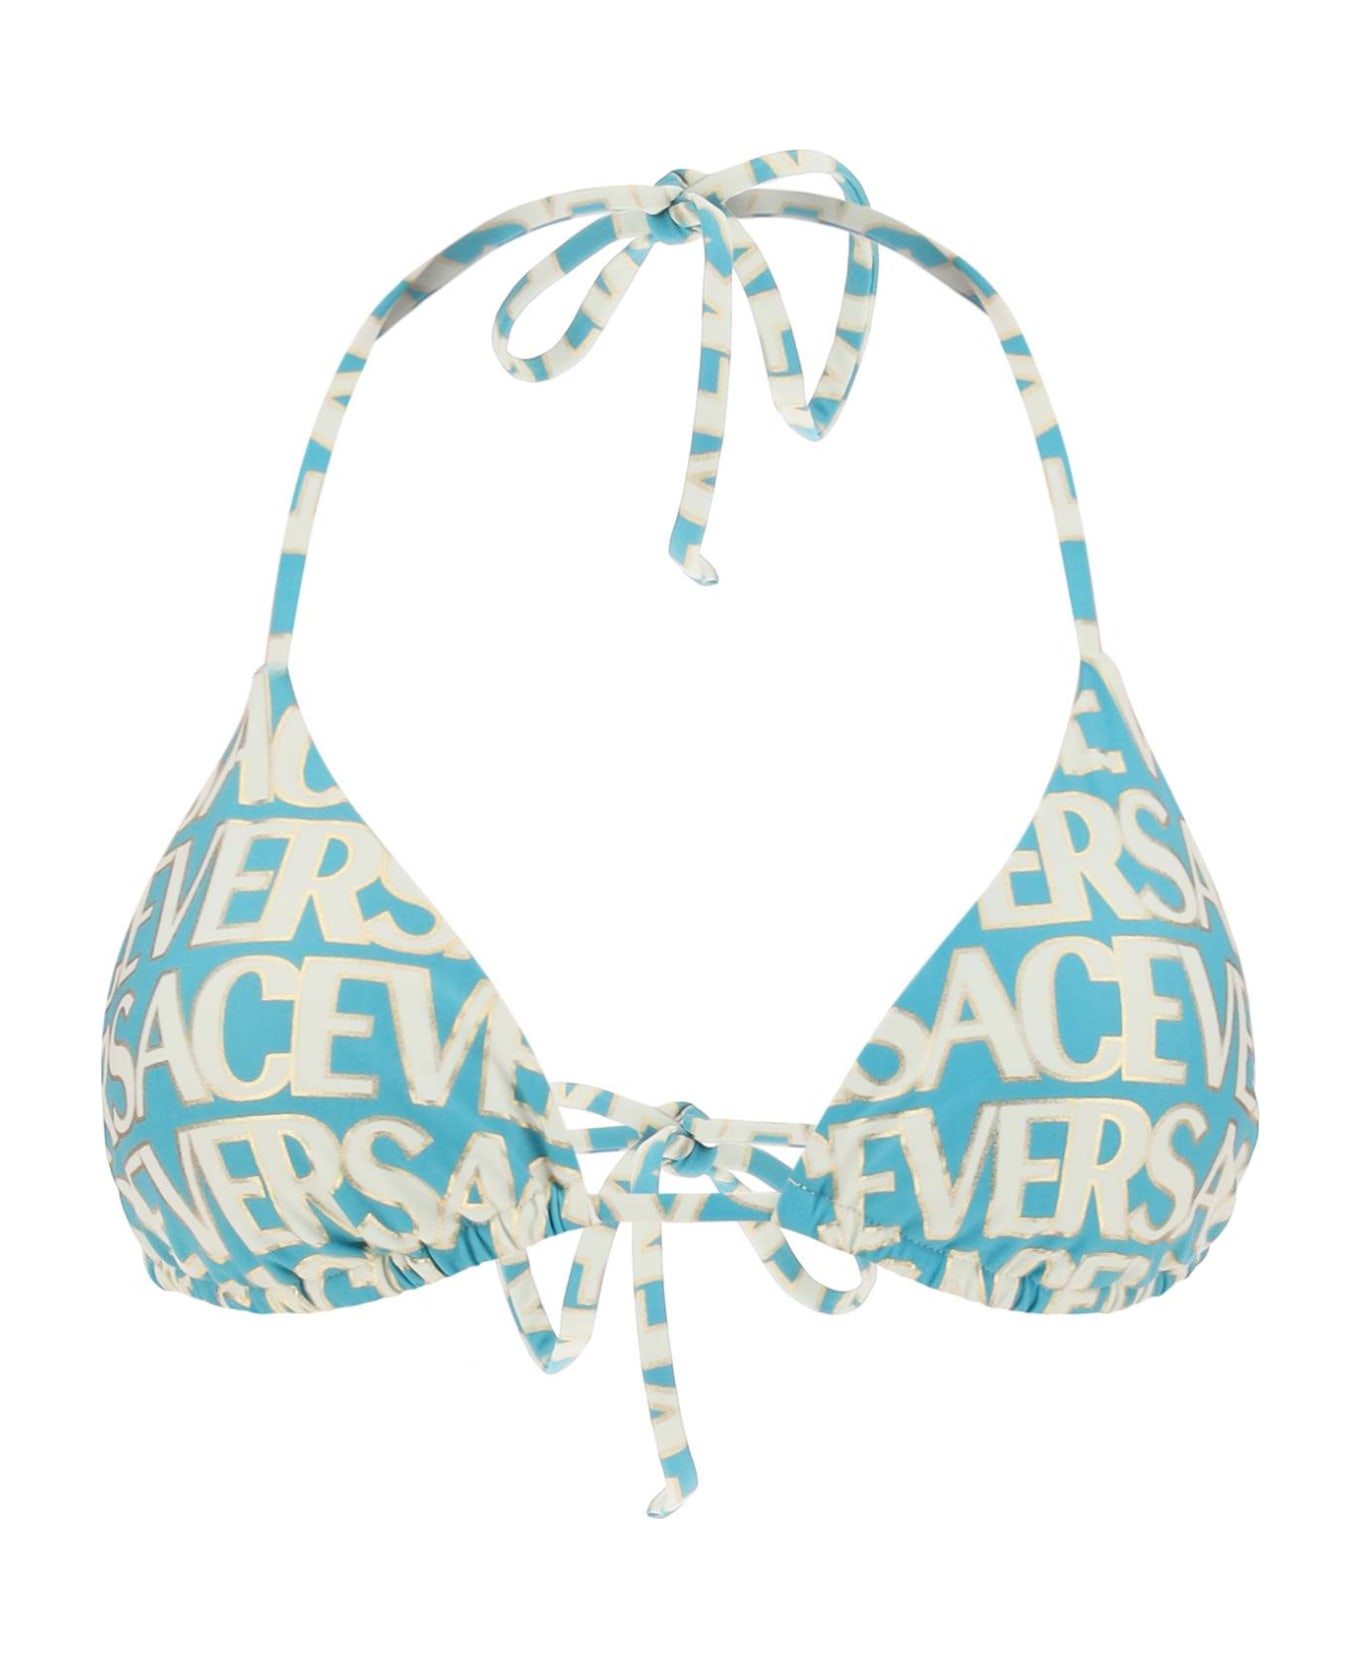 Versace Allover Bikini Top - TURQUOISE AVORY (Light blue)